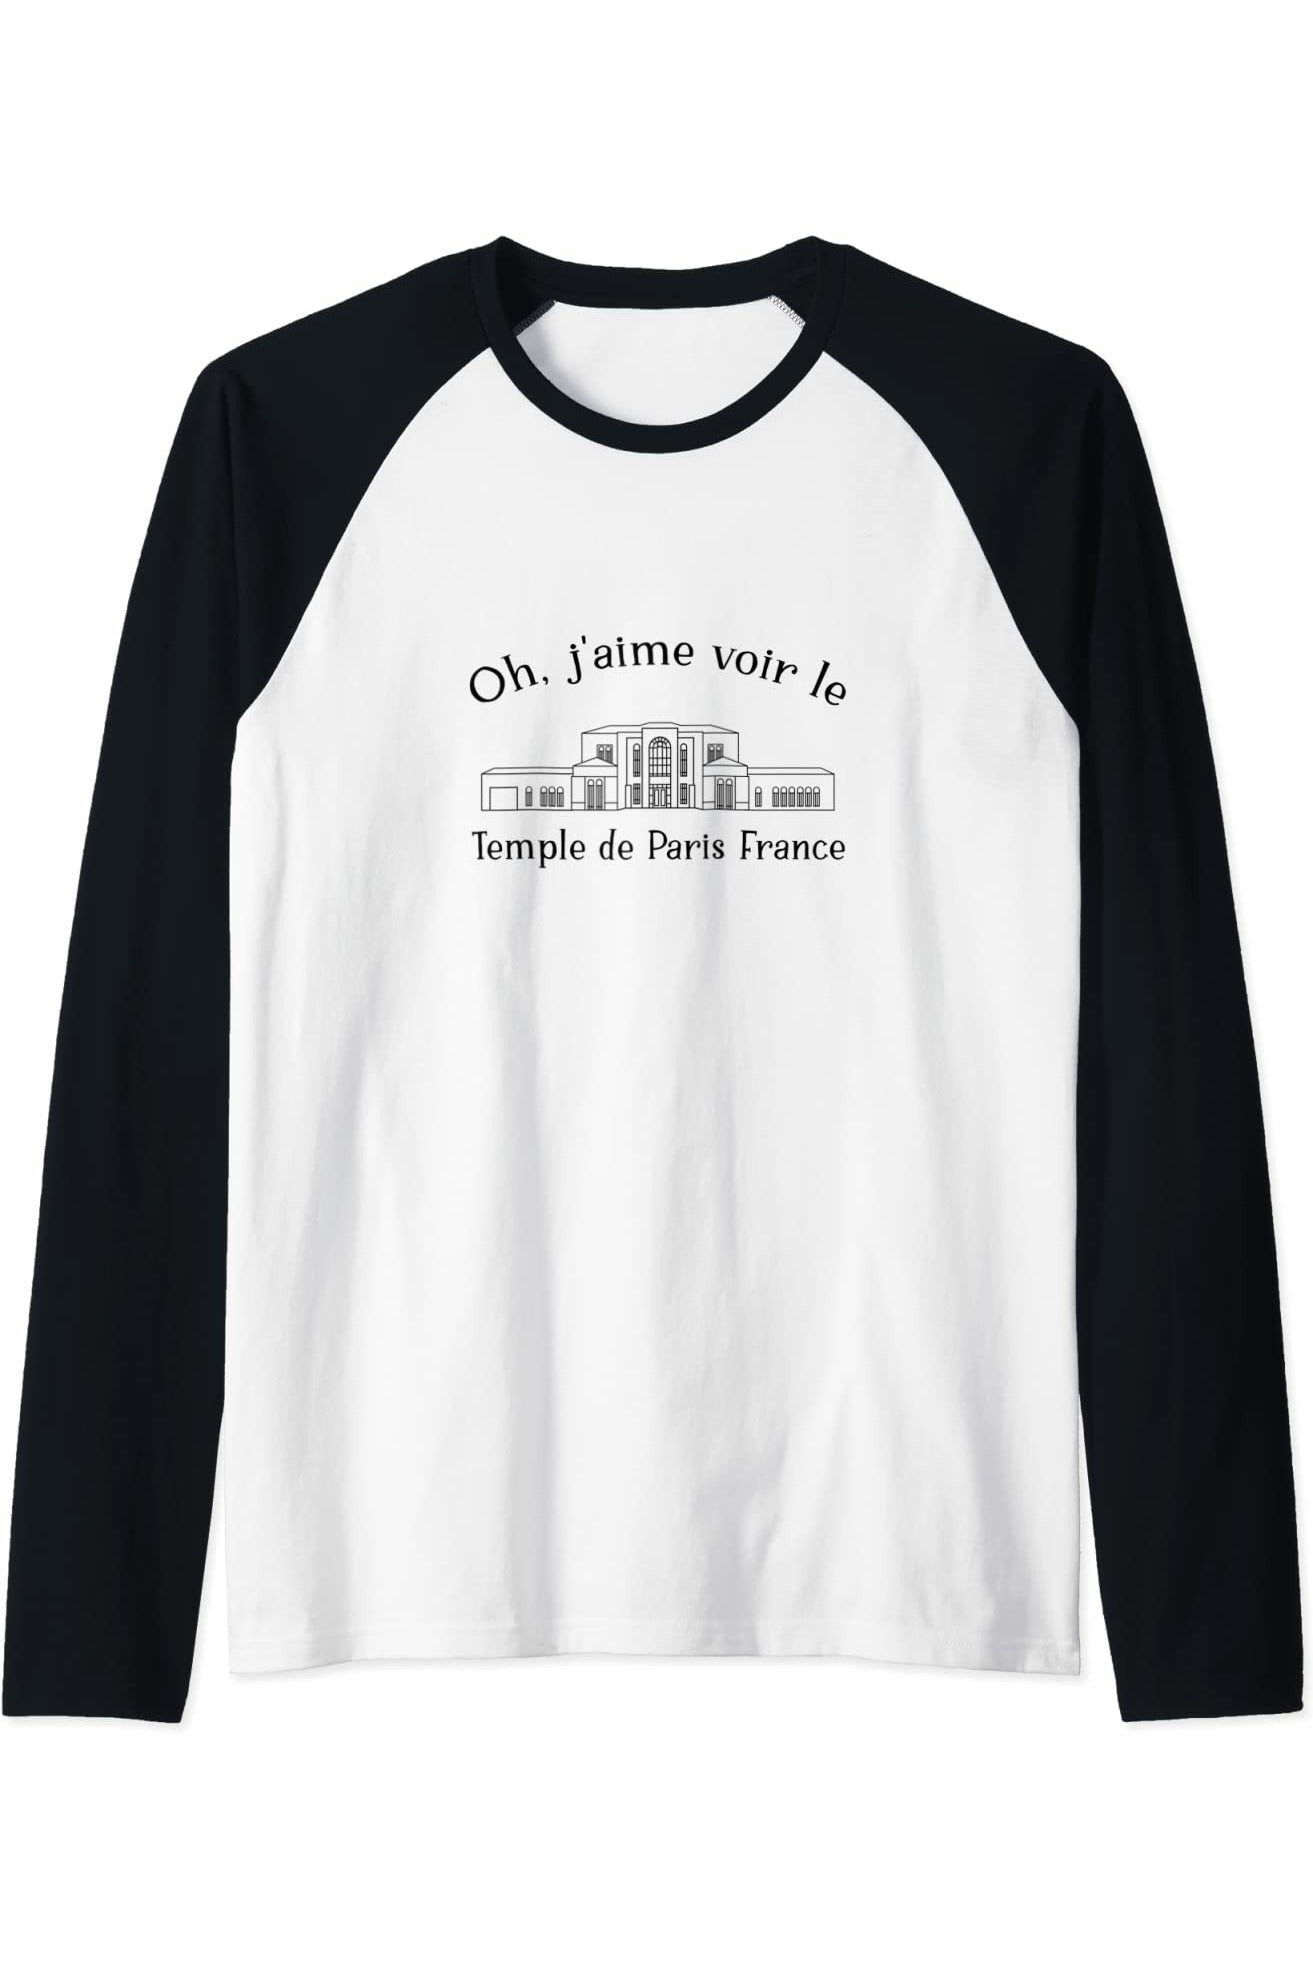 Parigi Francia Tempio, mi piace vedere il mio tempio, felice (francese) Raglan T-Shirt